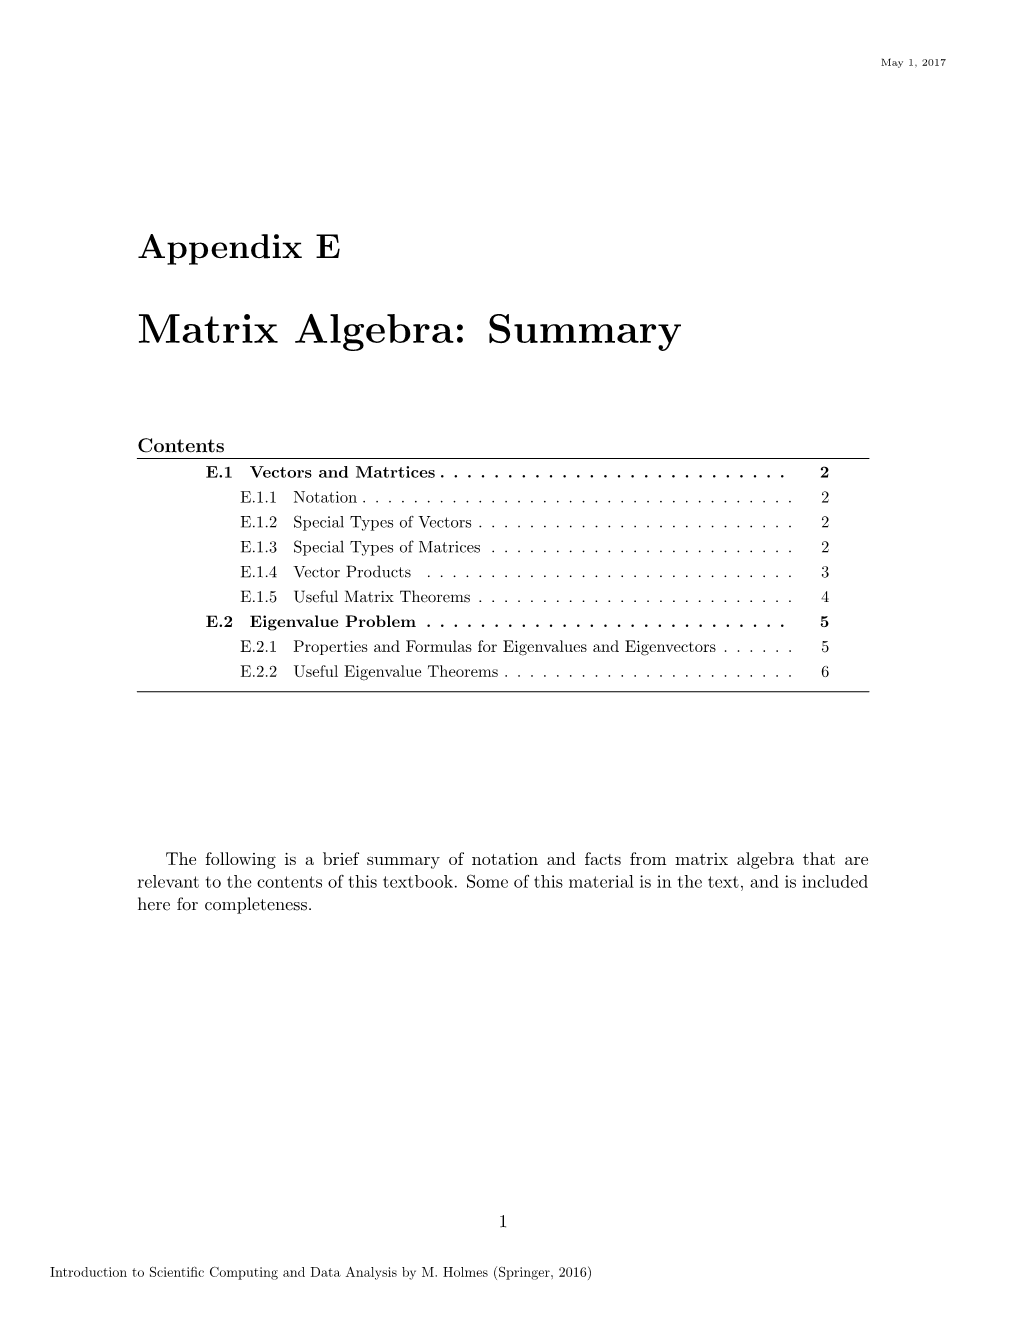 Matrix Algebra: Summary